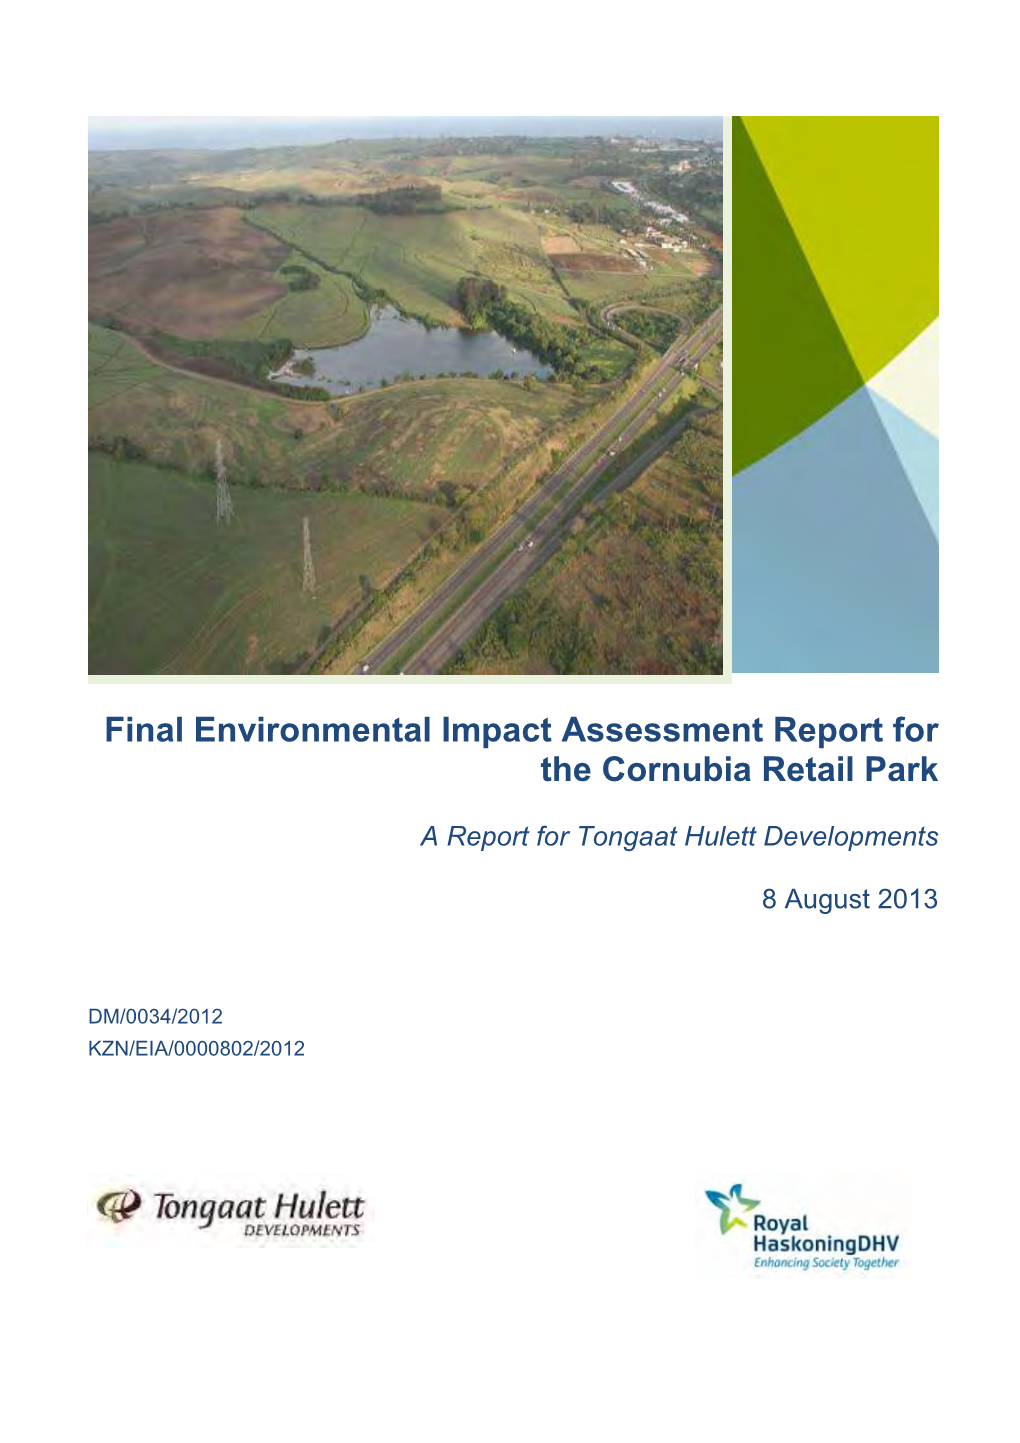 Final Environmental Impact Assessment Report for the Cornubia Retail Park